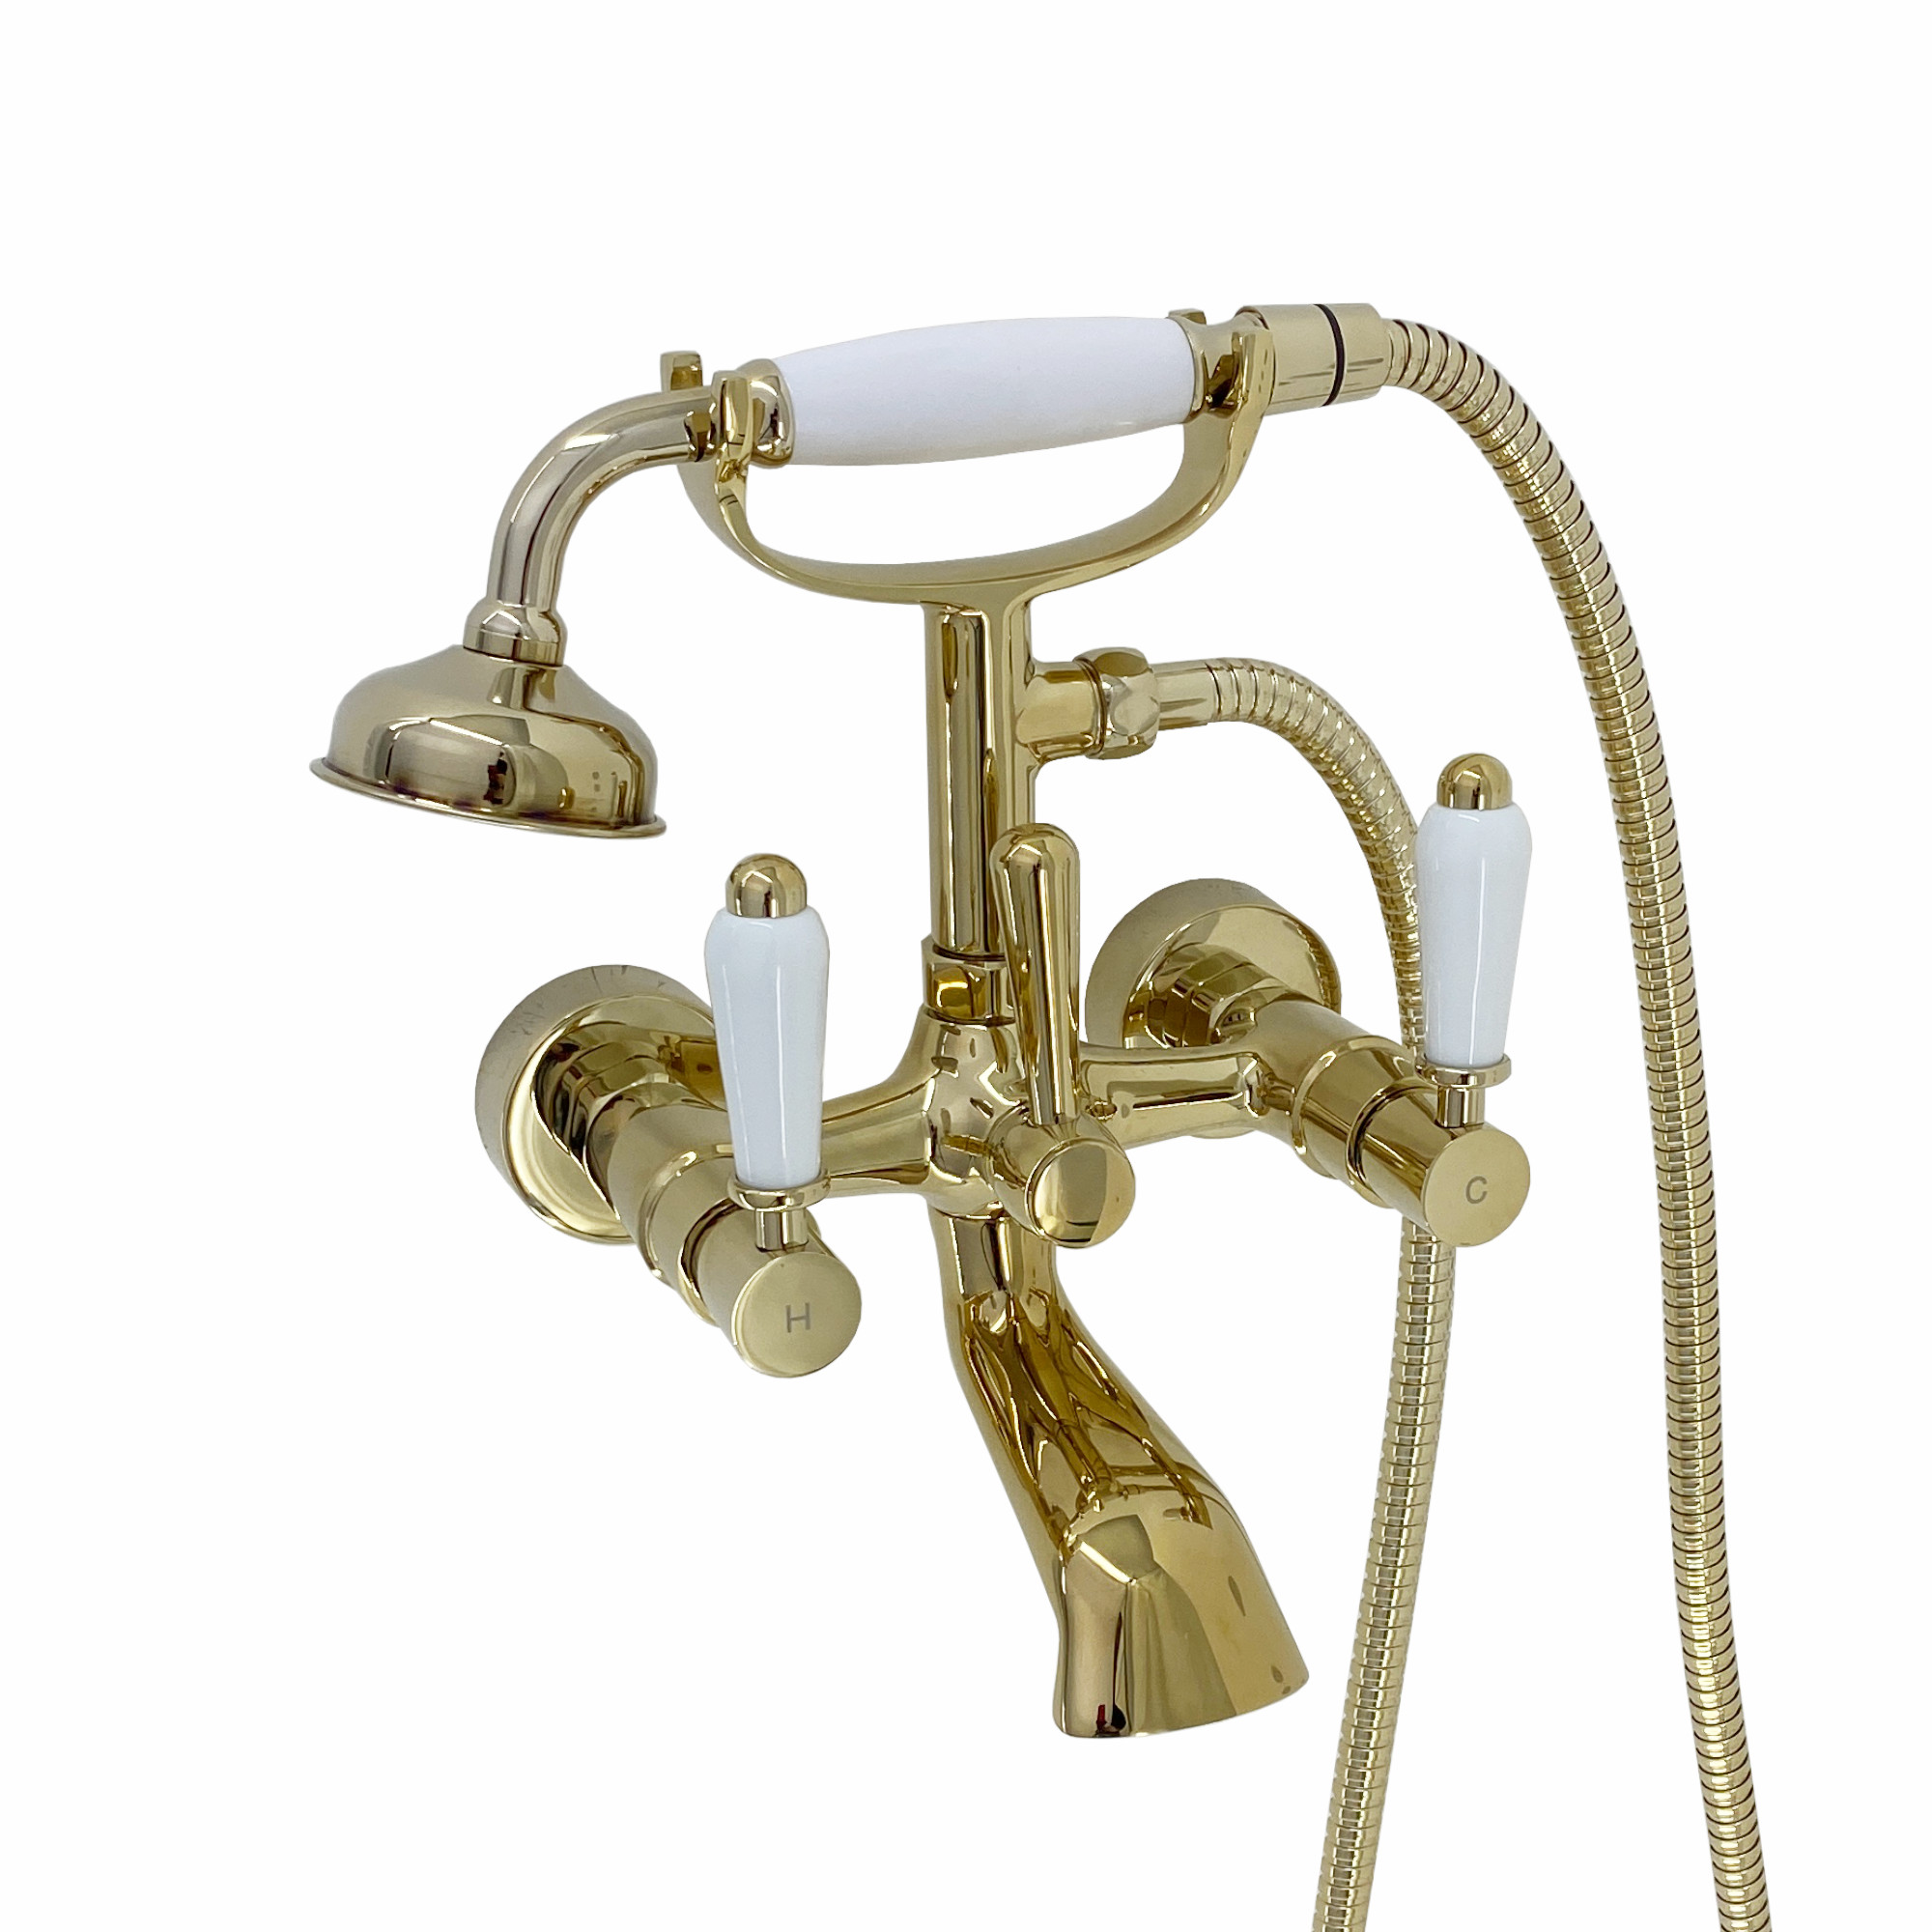 ENKI, Downton, BT0610 Wall Mounted Bath Shower Mixer Tap White Levers Gold